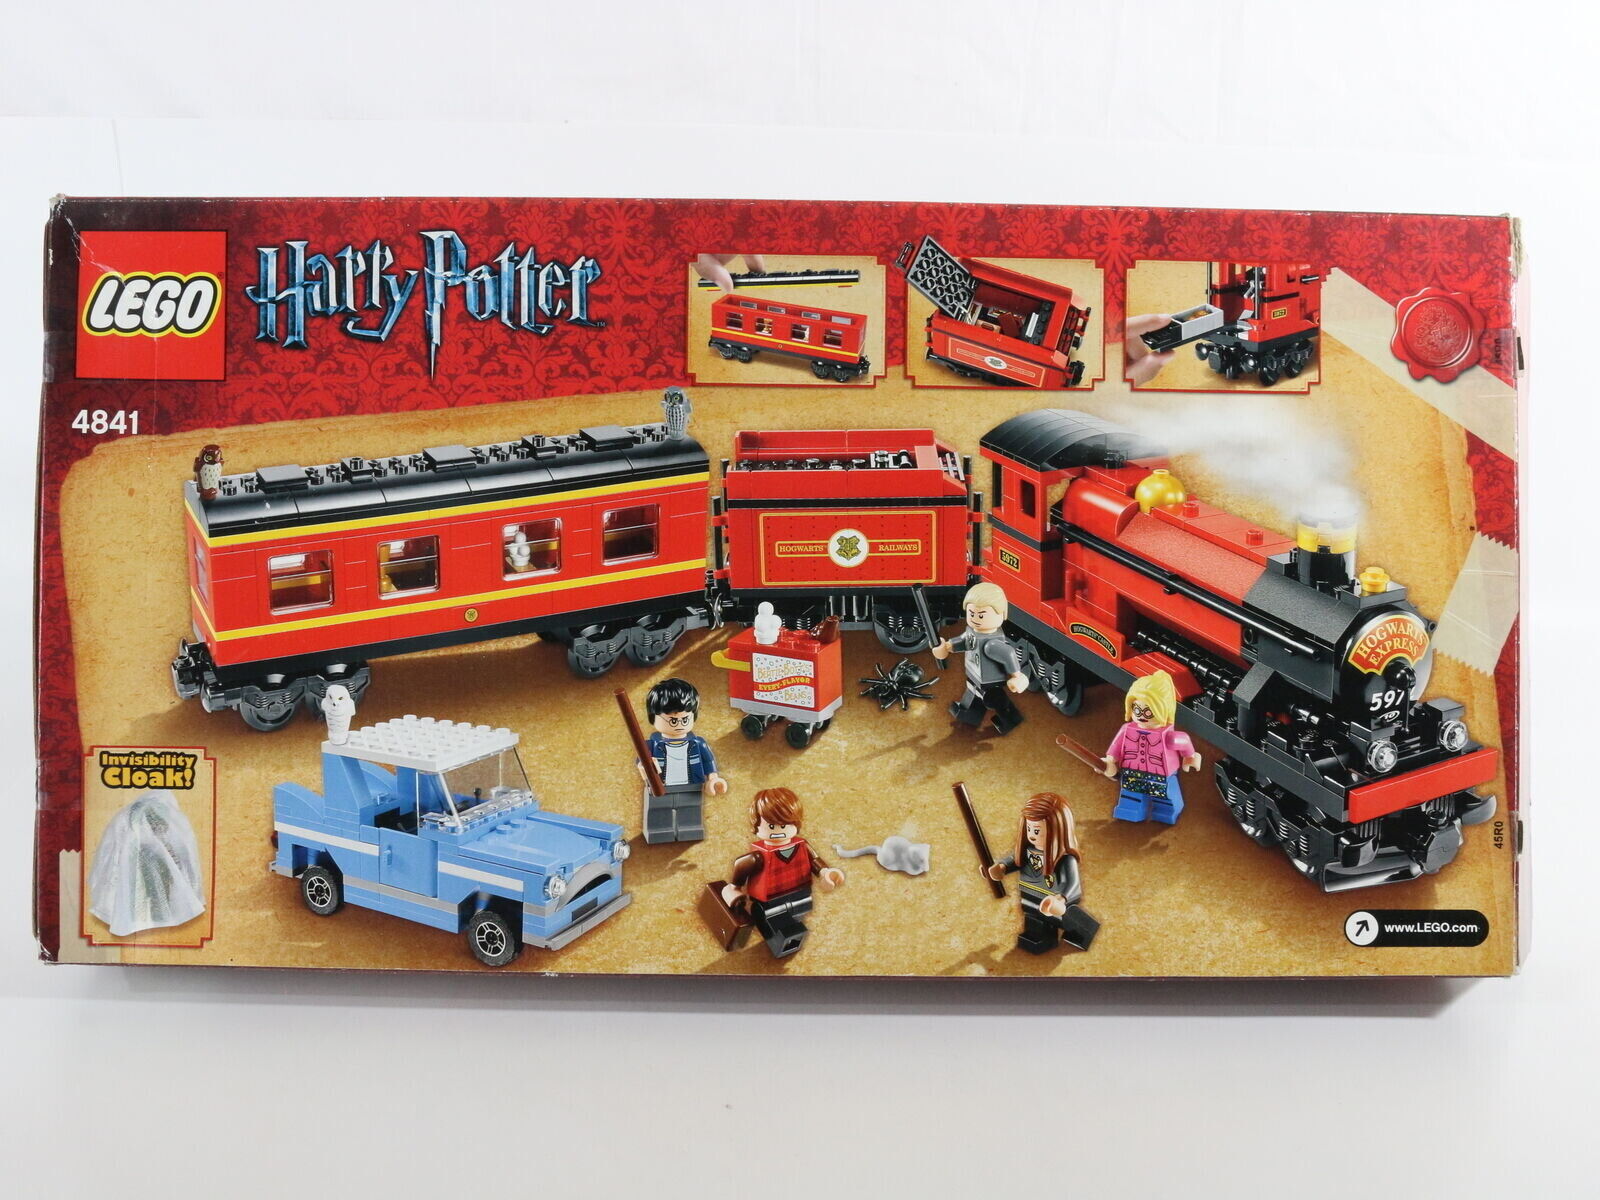 Lego Harry Potter Hogwarts Express Train Mostly Built 4841 + Box Instructions